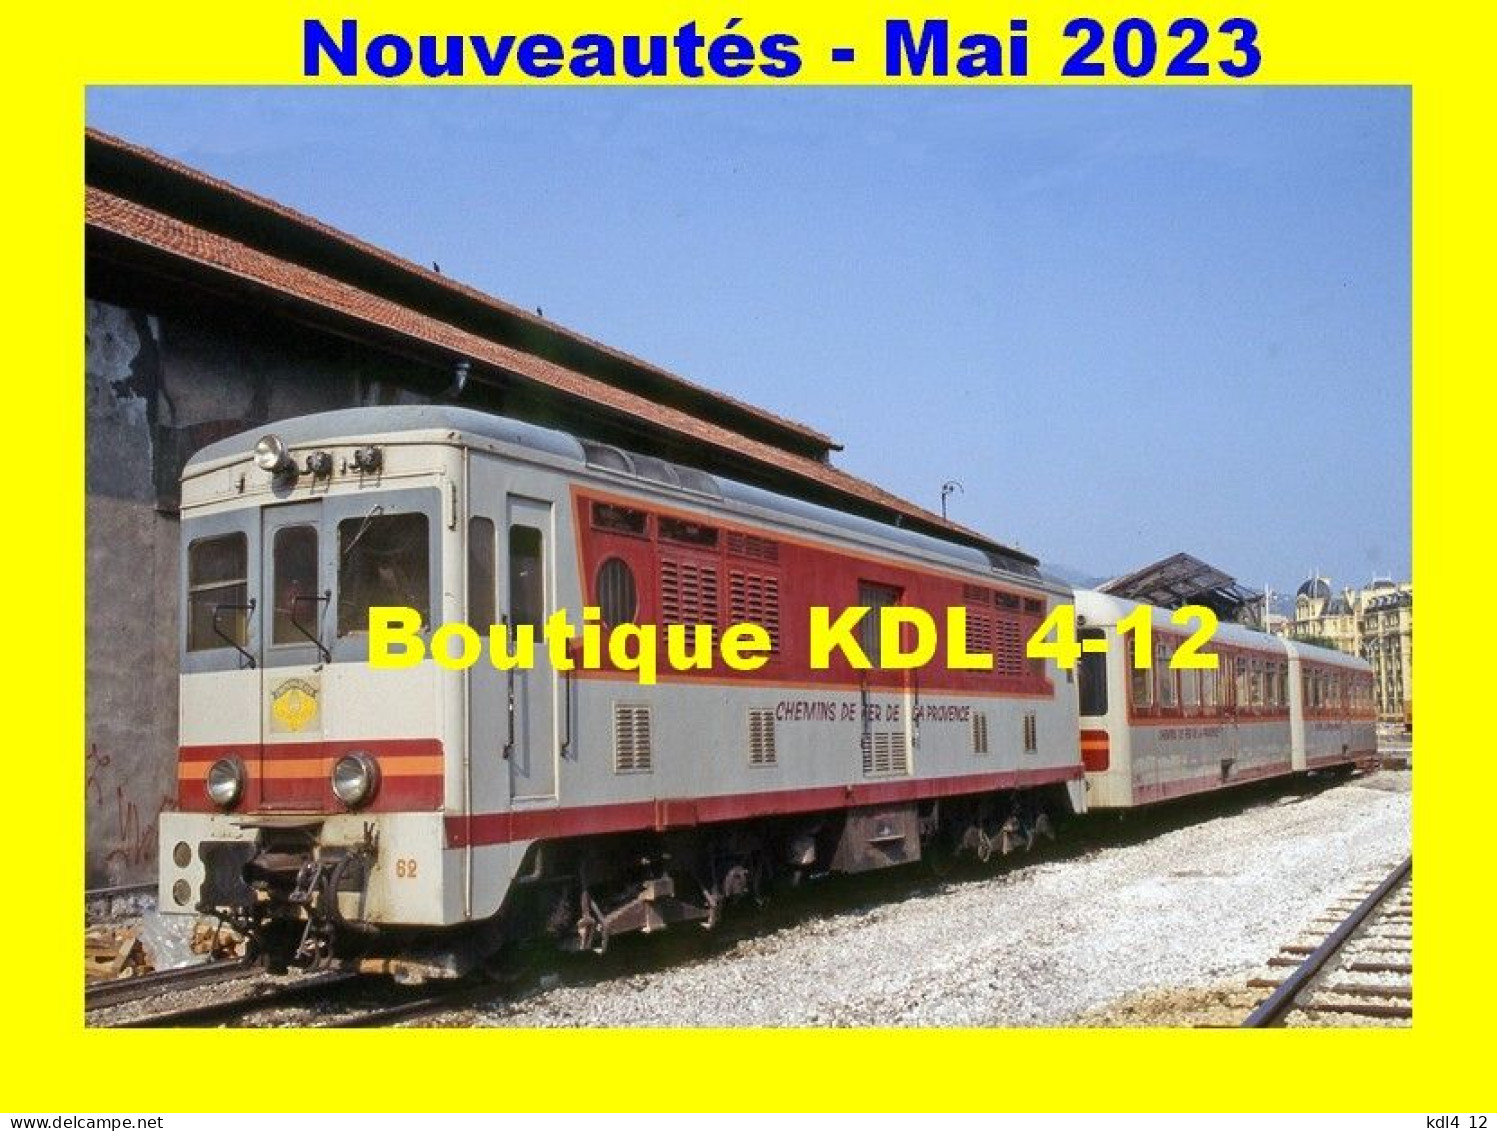 AL 879 - Train, Loco Brissonneau Et Lotz N° 62 - NICE - Alpes Maritimes - CP - Ferrocarril - Estación